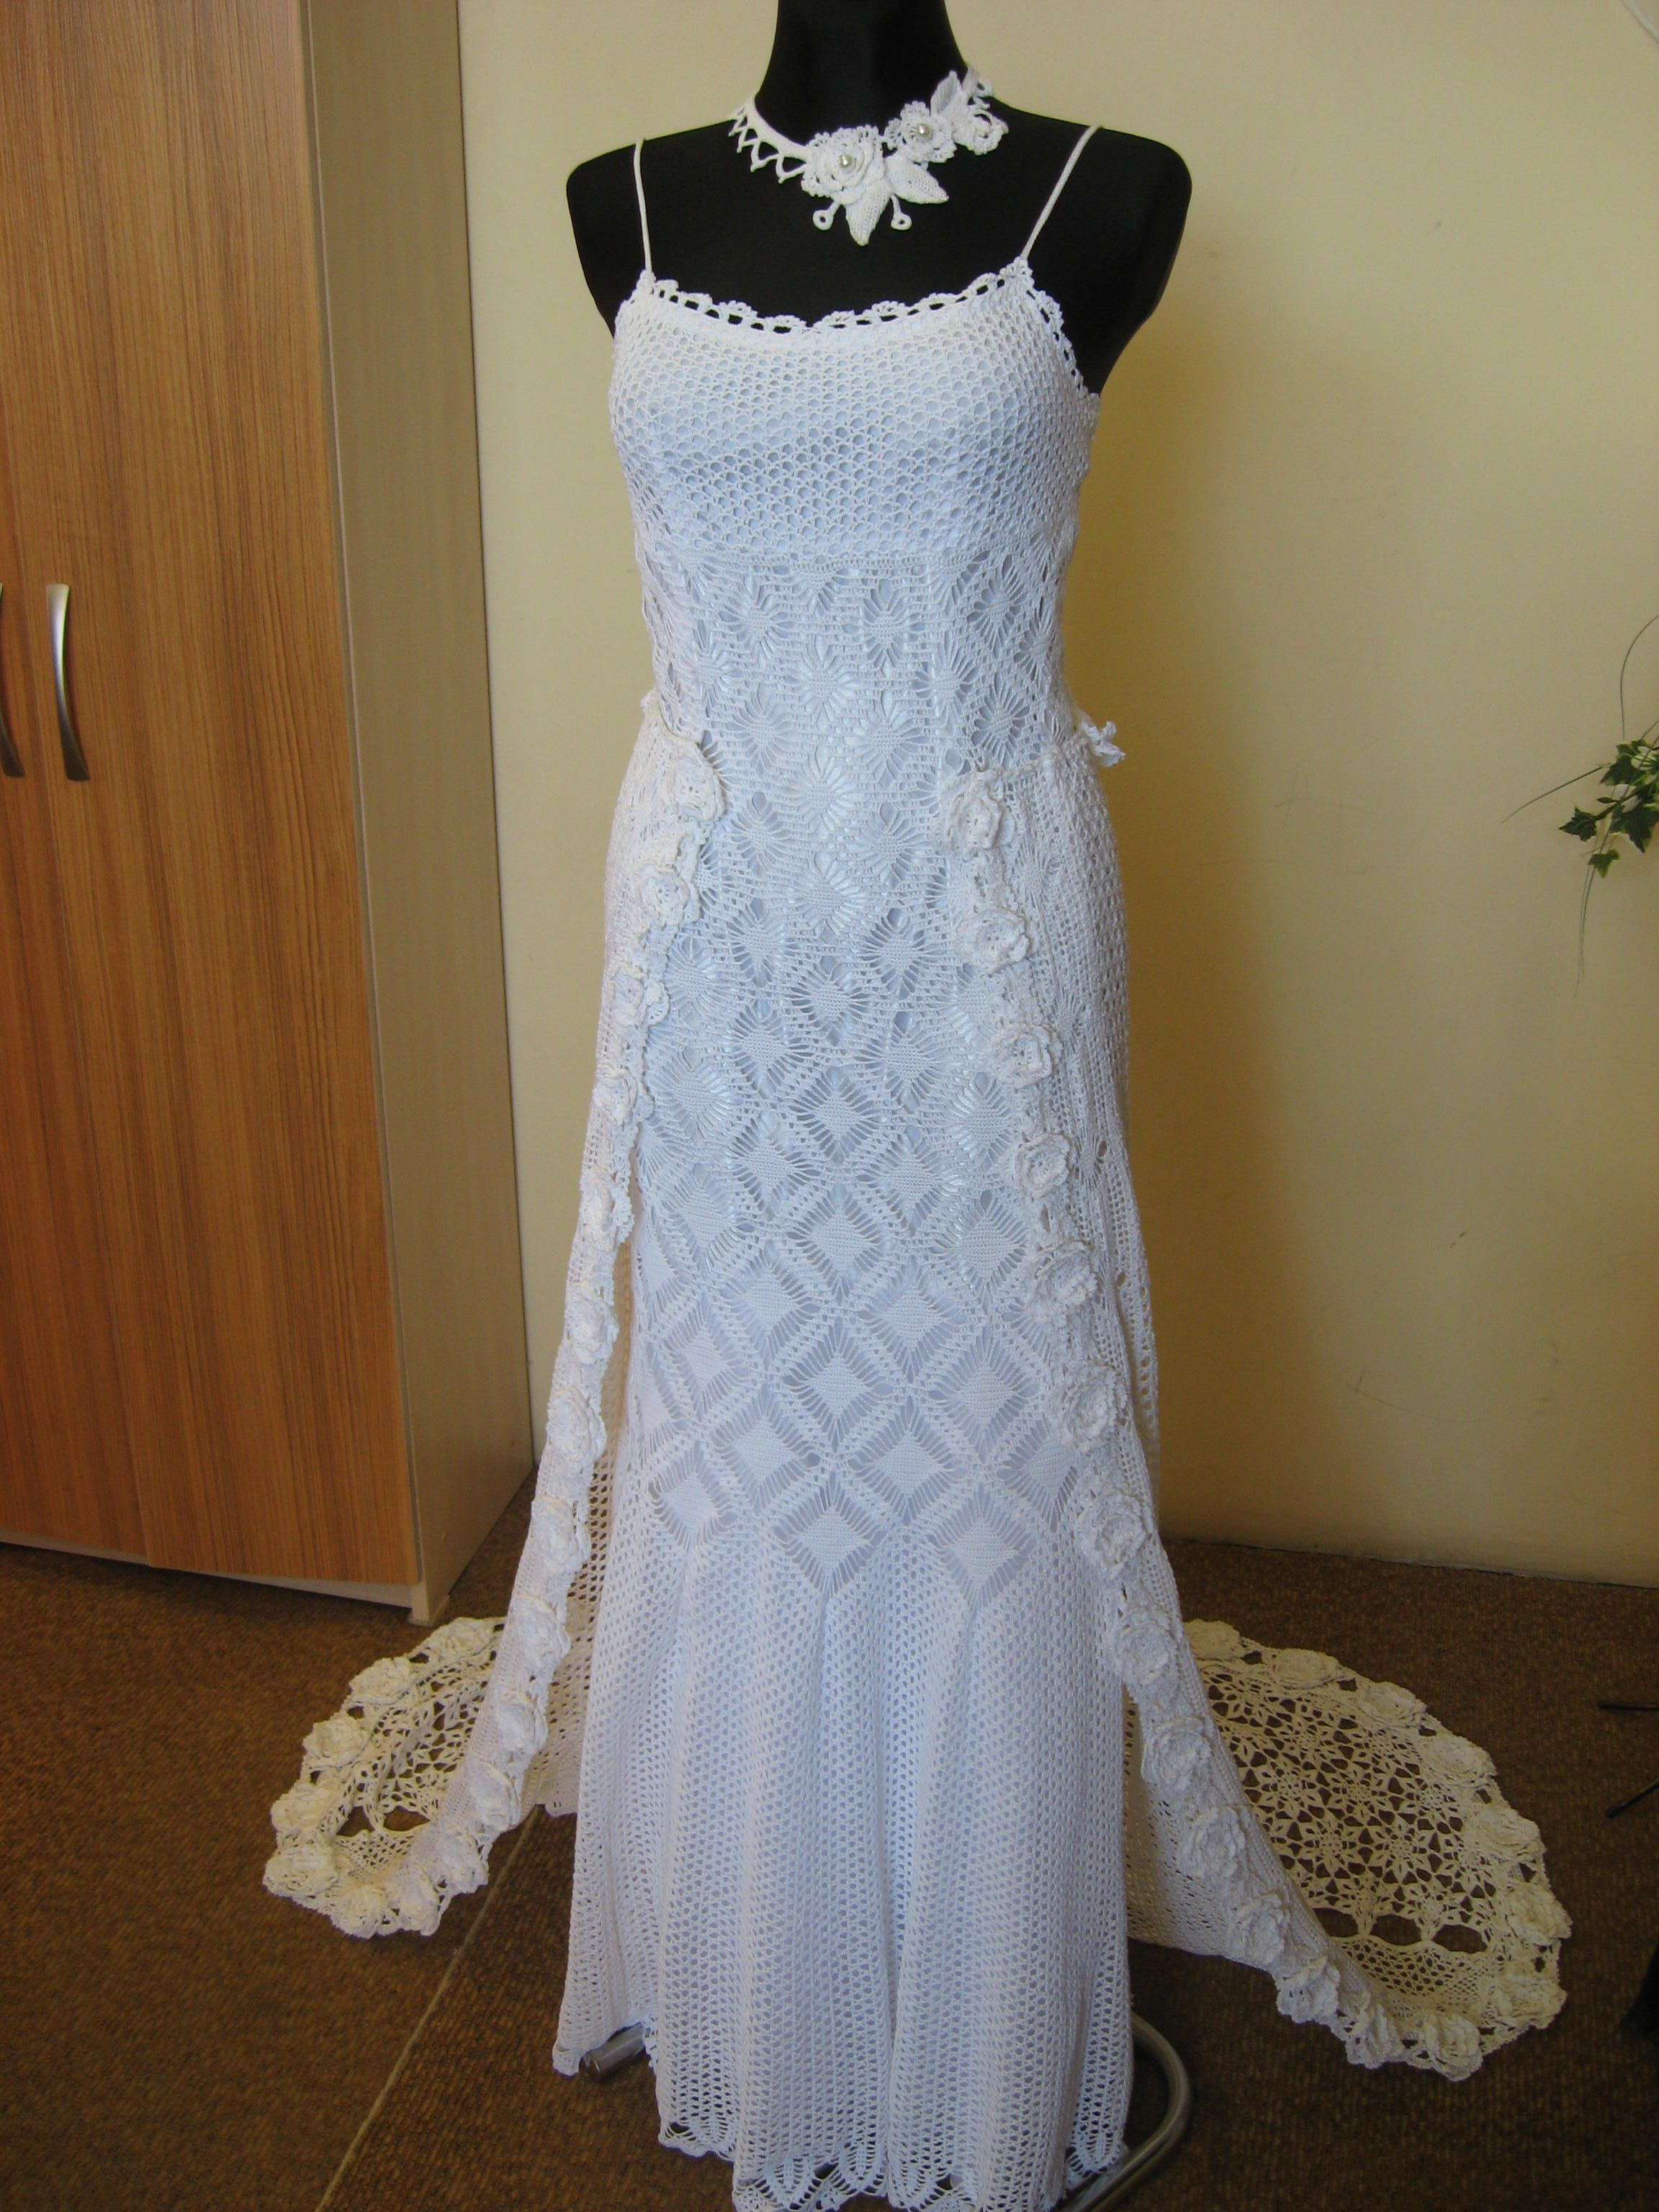 Crochet Wedding Dress Pattern Free Crocheted Wedding Dresses My Someday Wish List Crochet